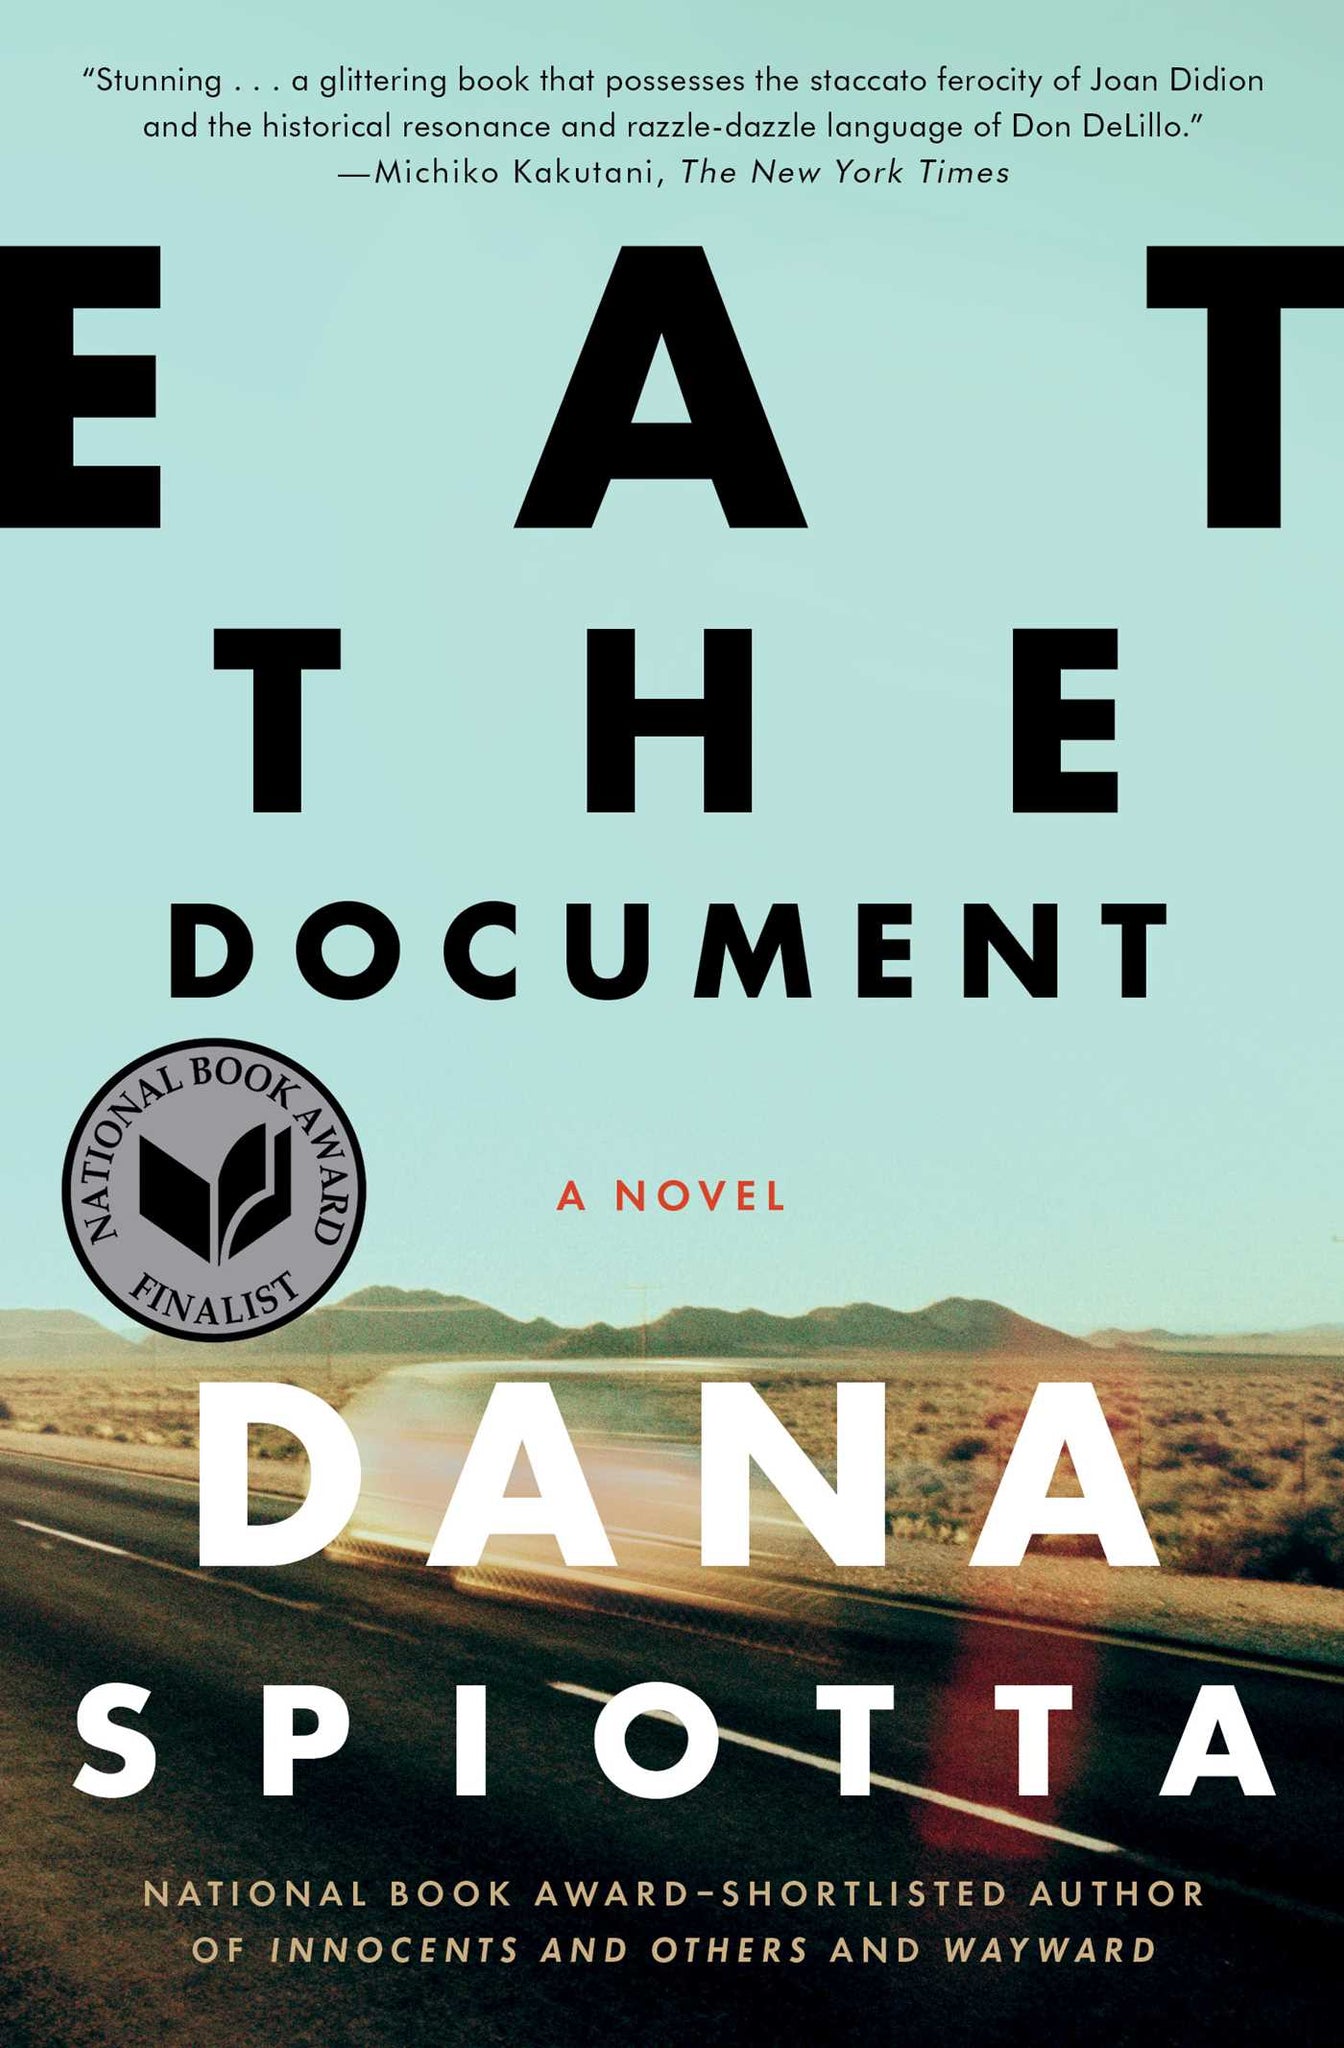 Eat the Document : A Novel